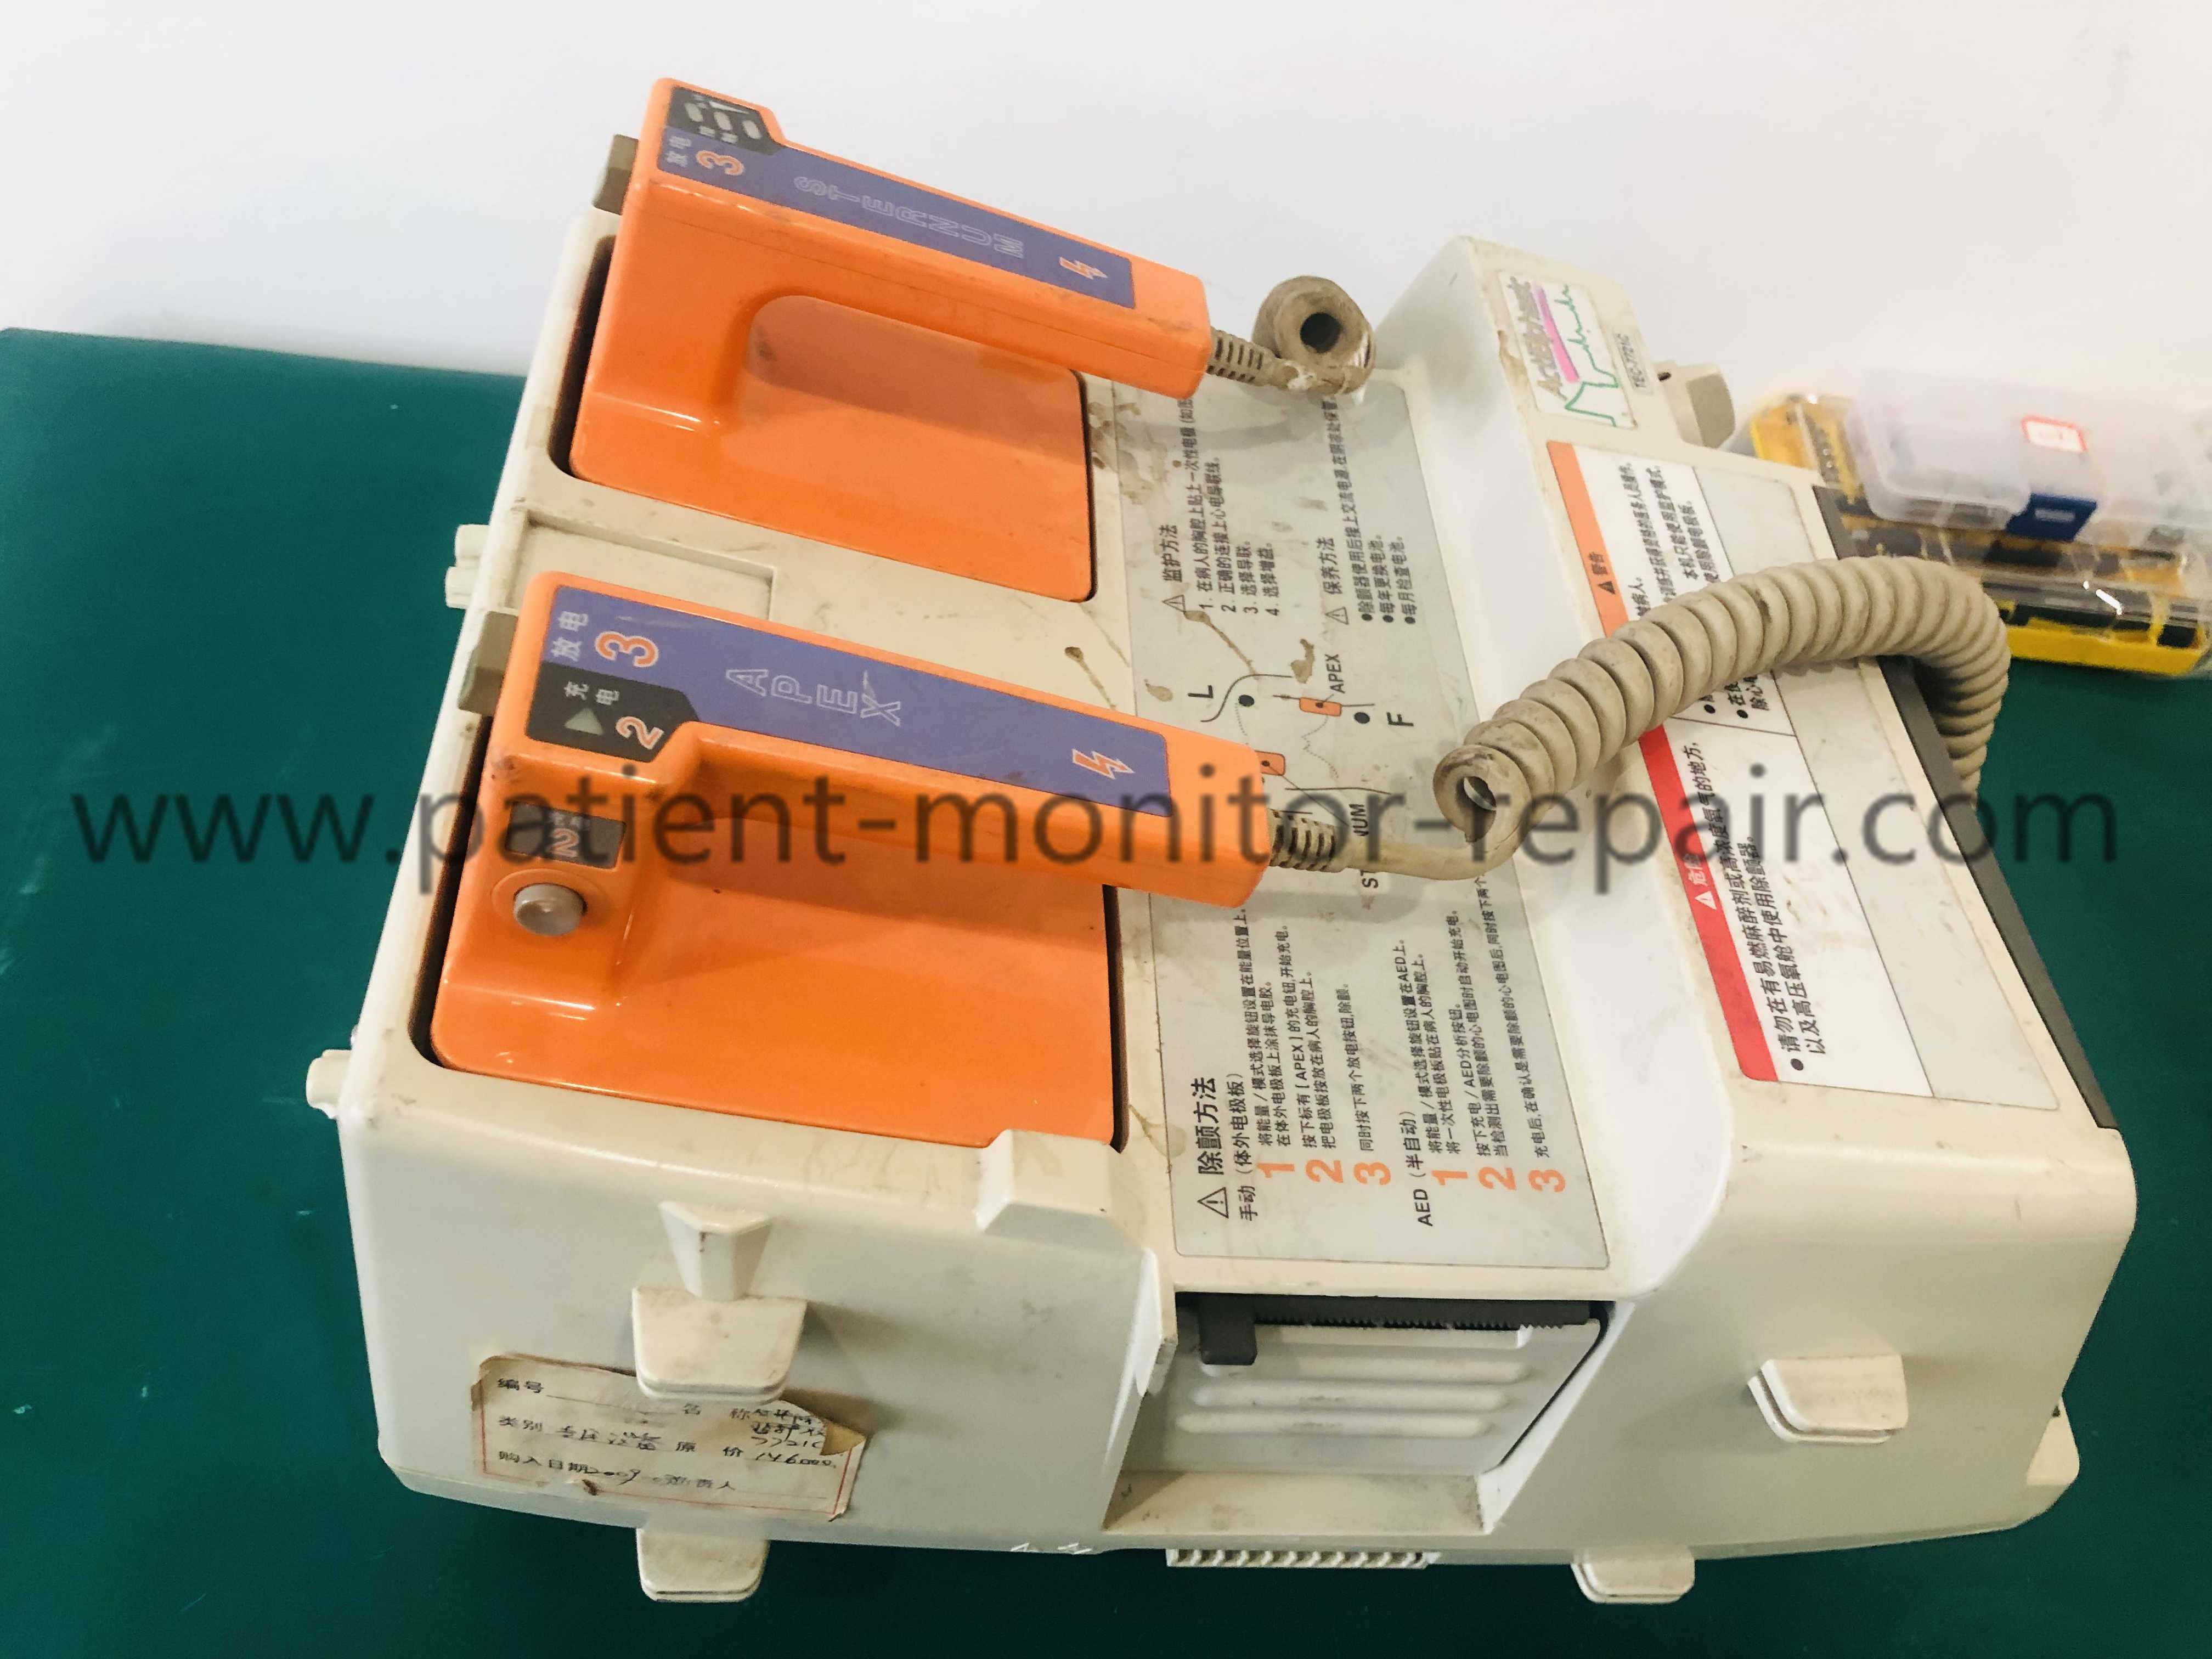 Nihon kohden Cardiolife TEC-7721C Defibrillator Repair Medical Device